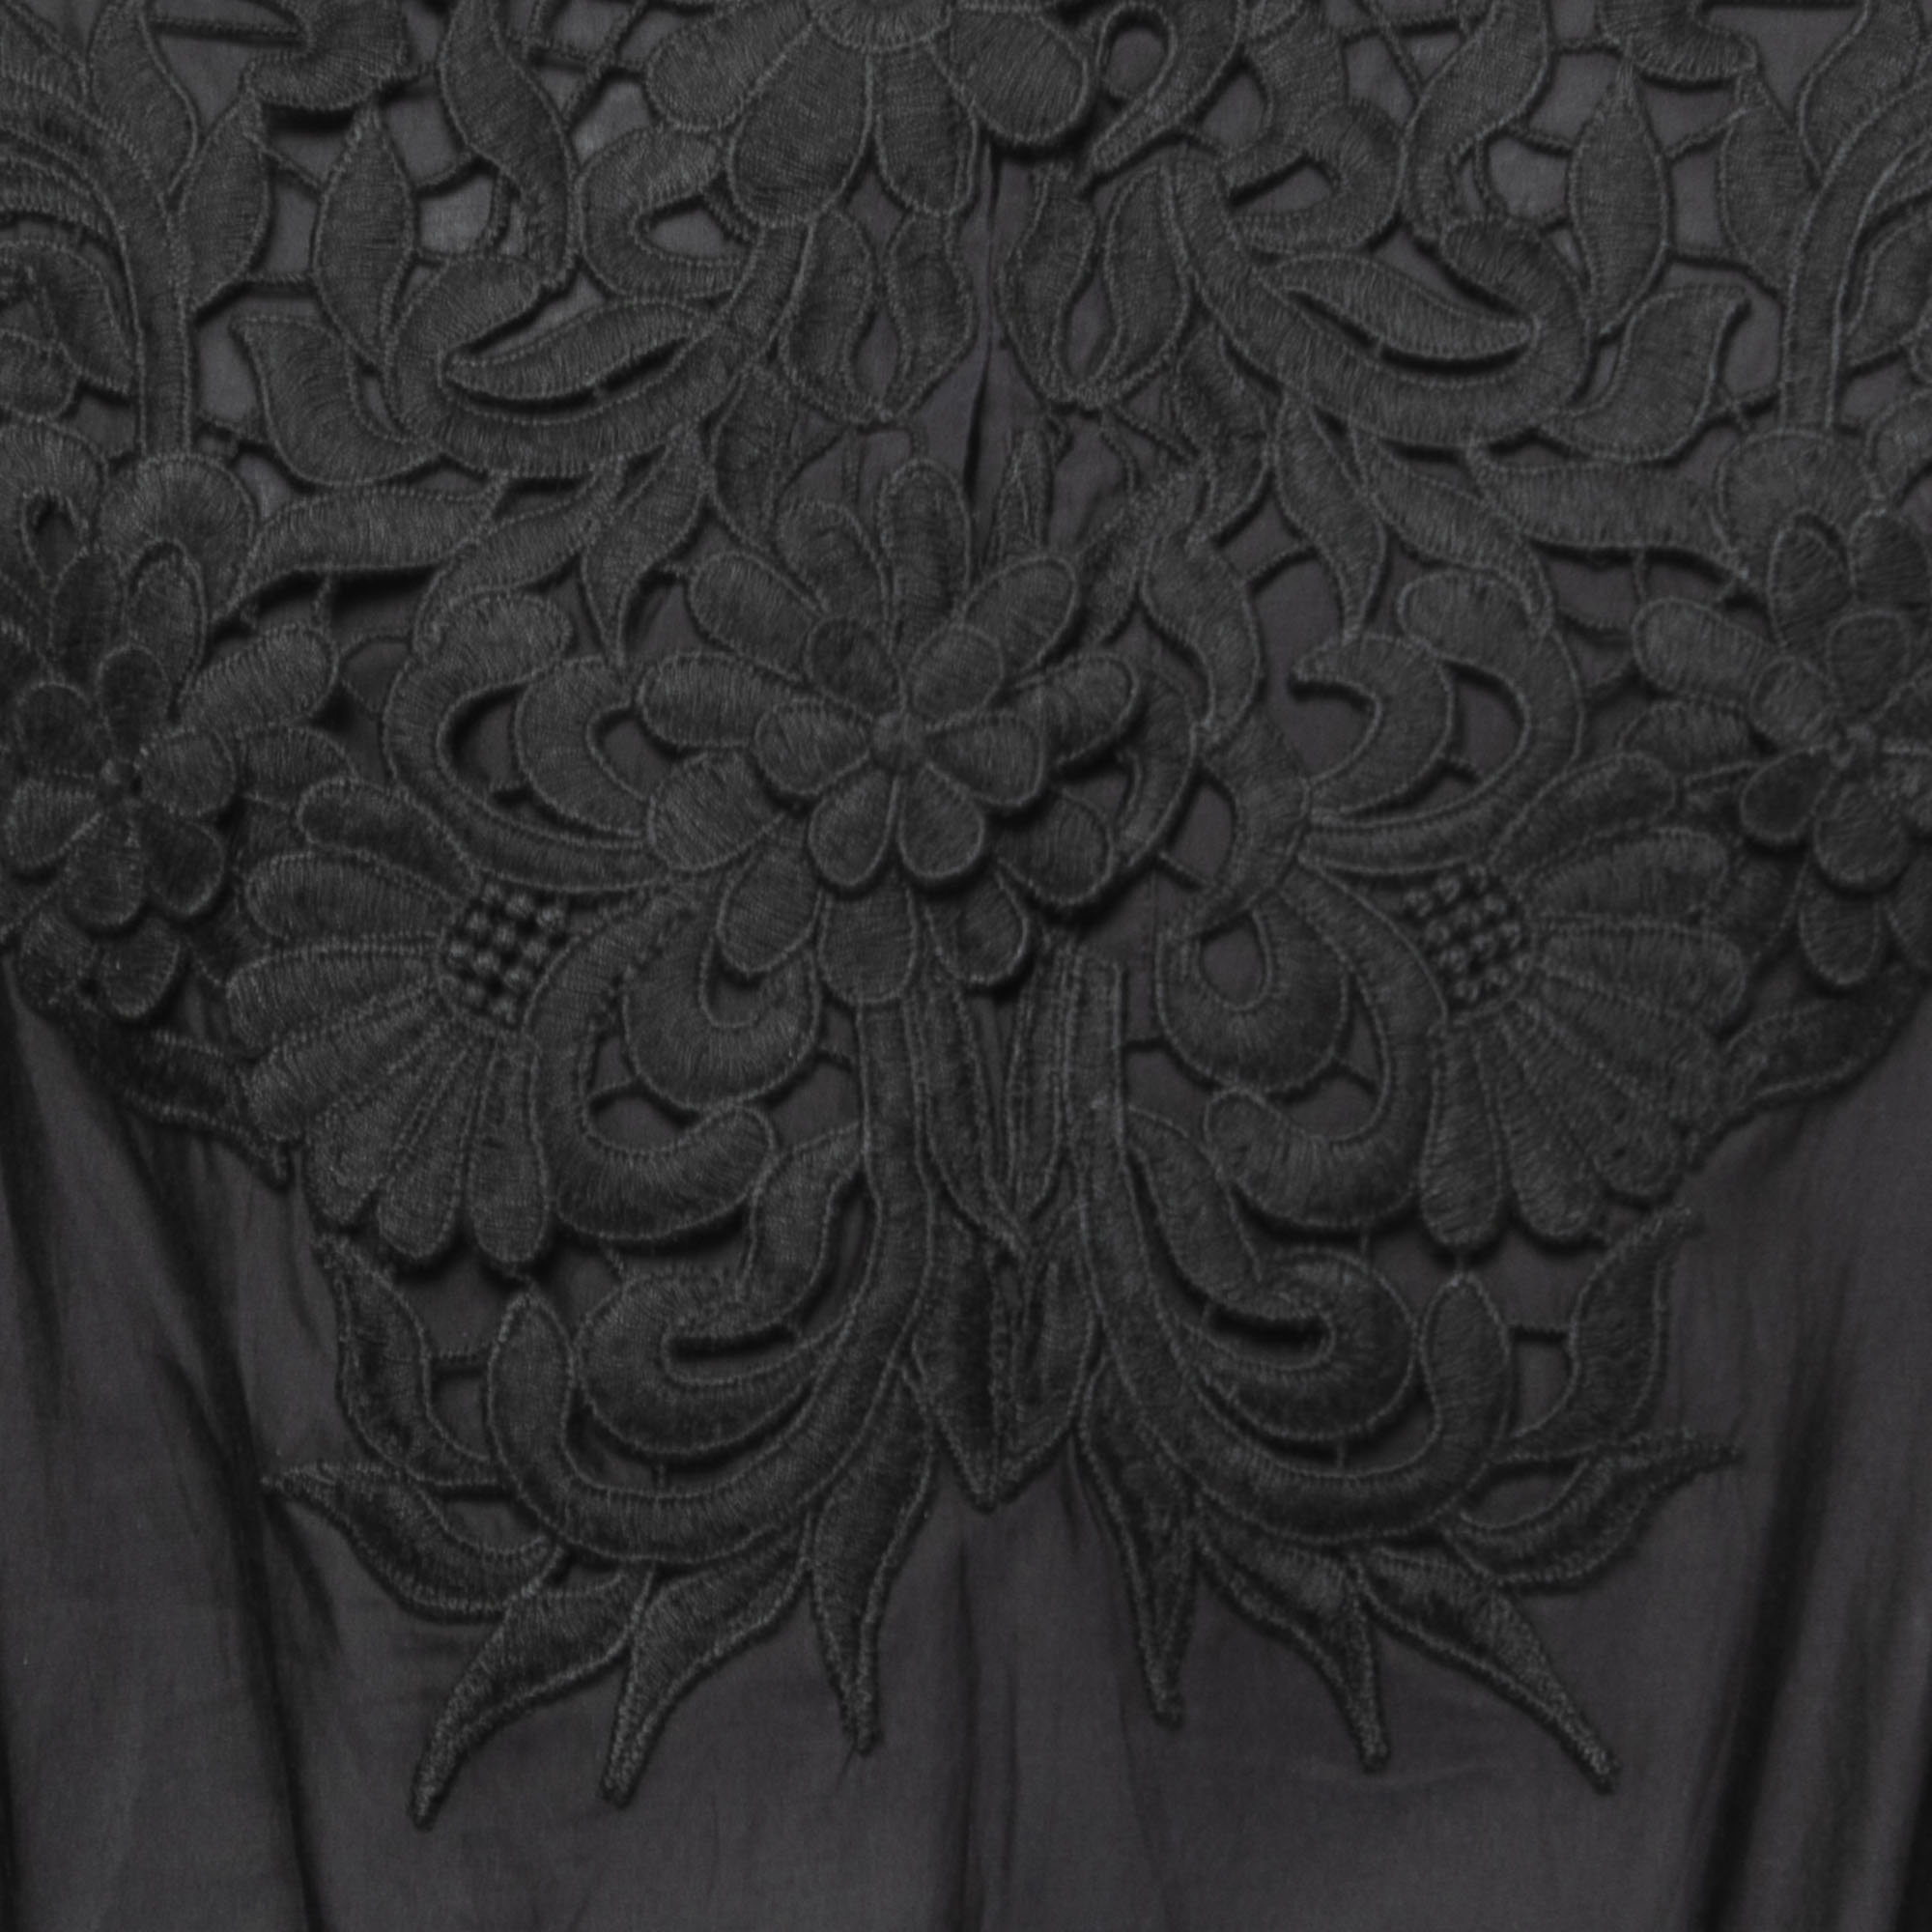 Moschino Cheap & Chic Black Cotton Lace Trimmed Elasticized Waist Short Dress L